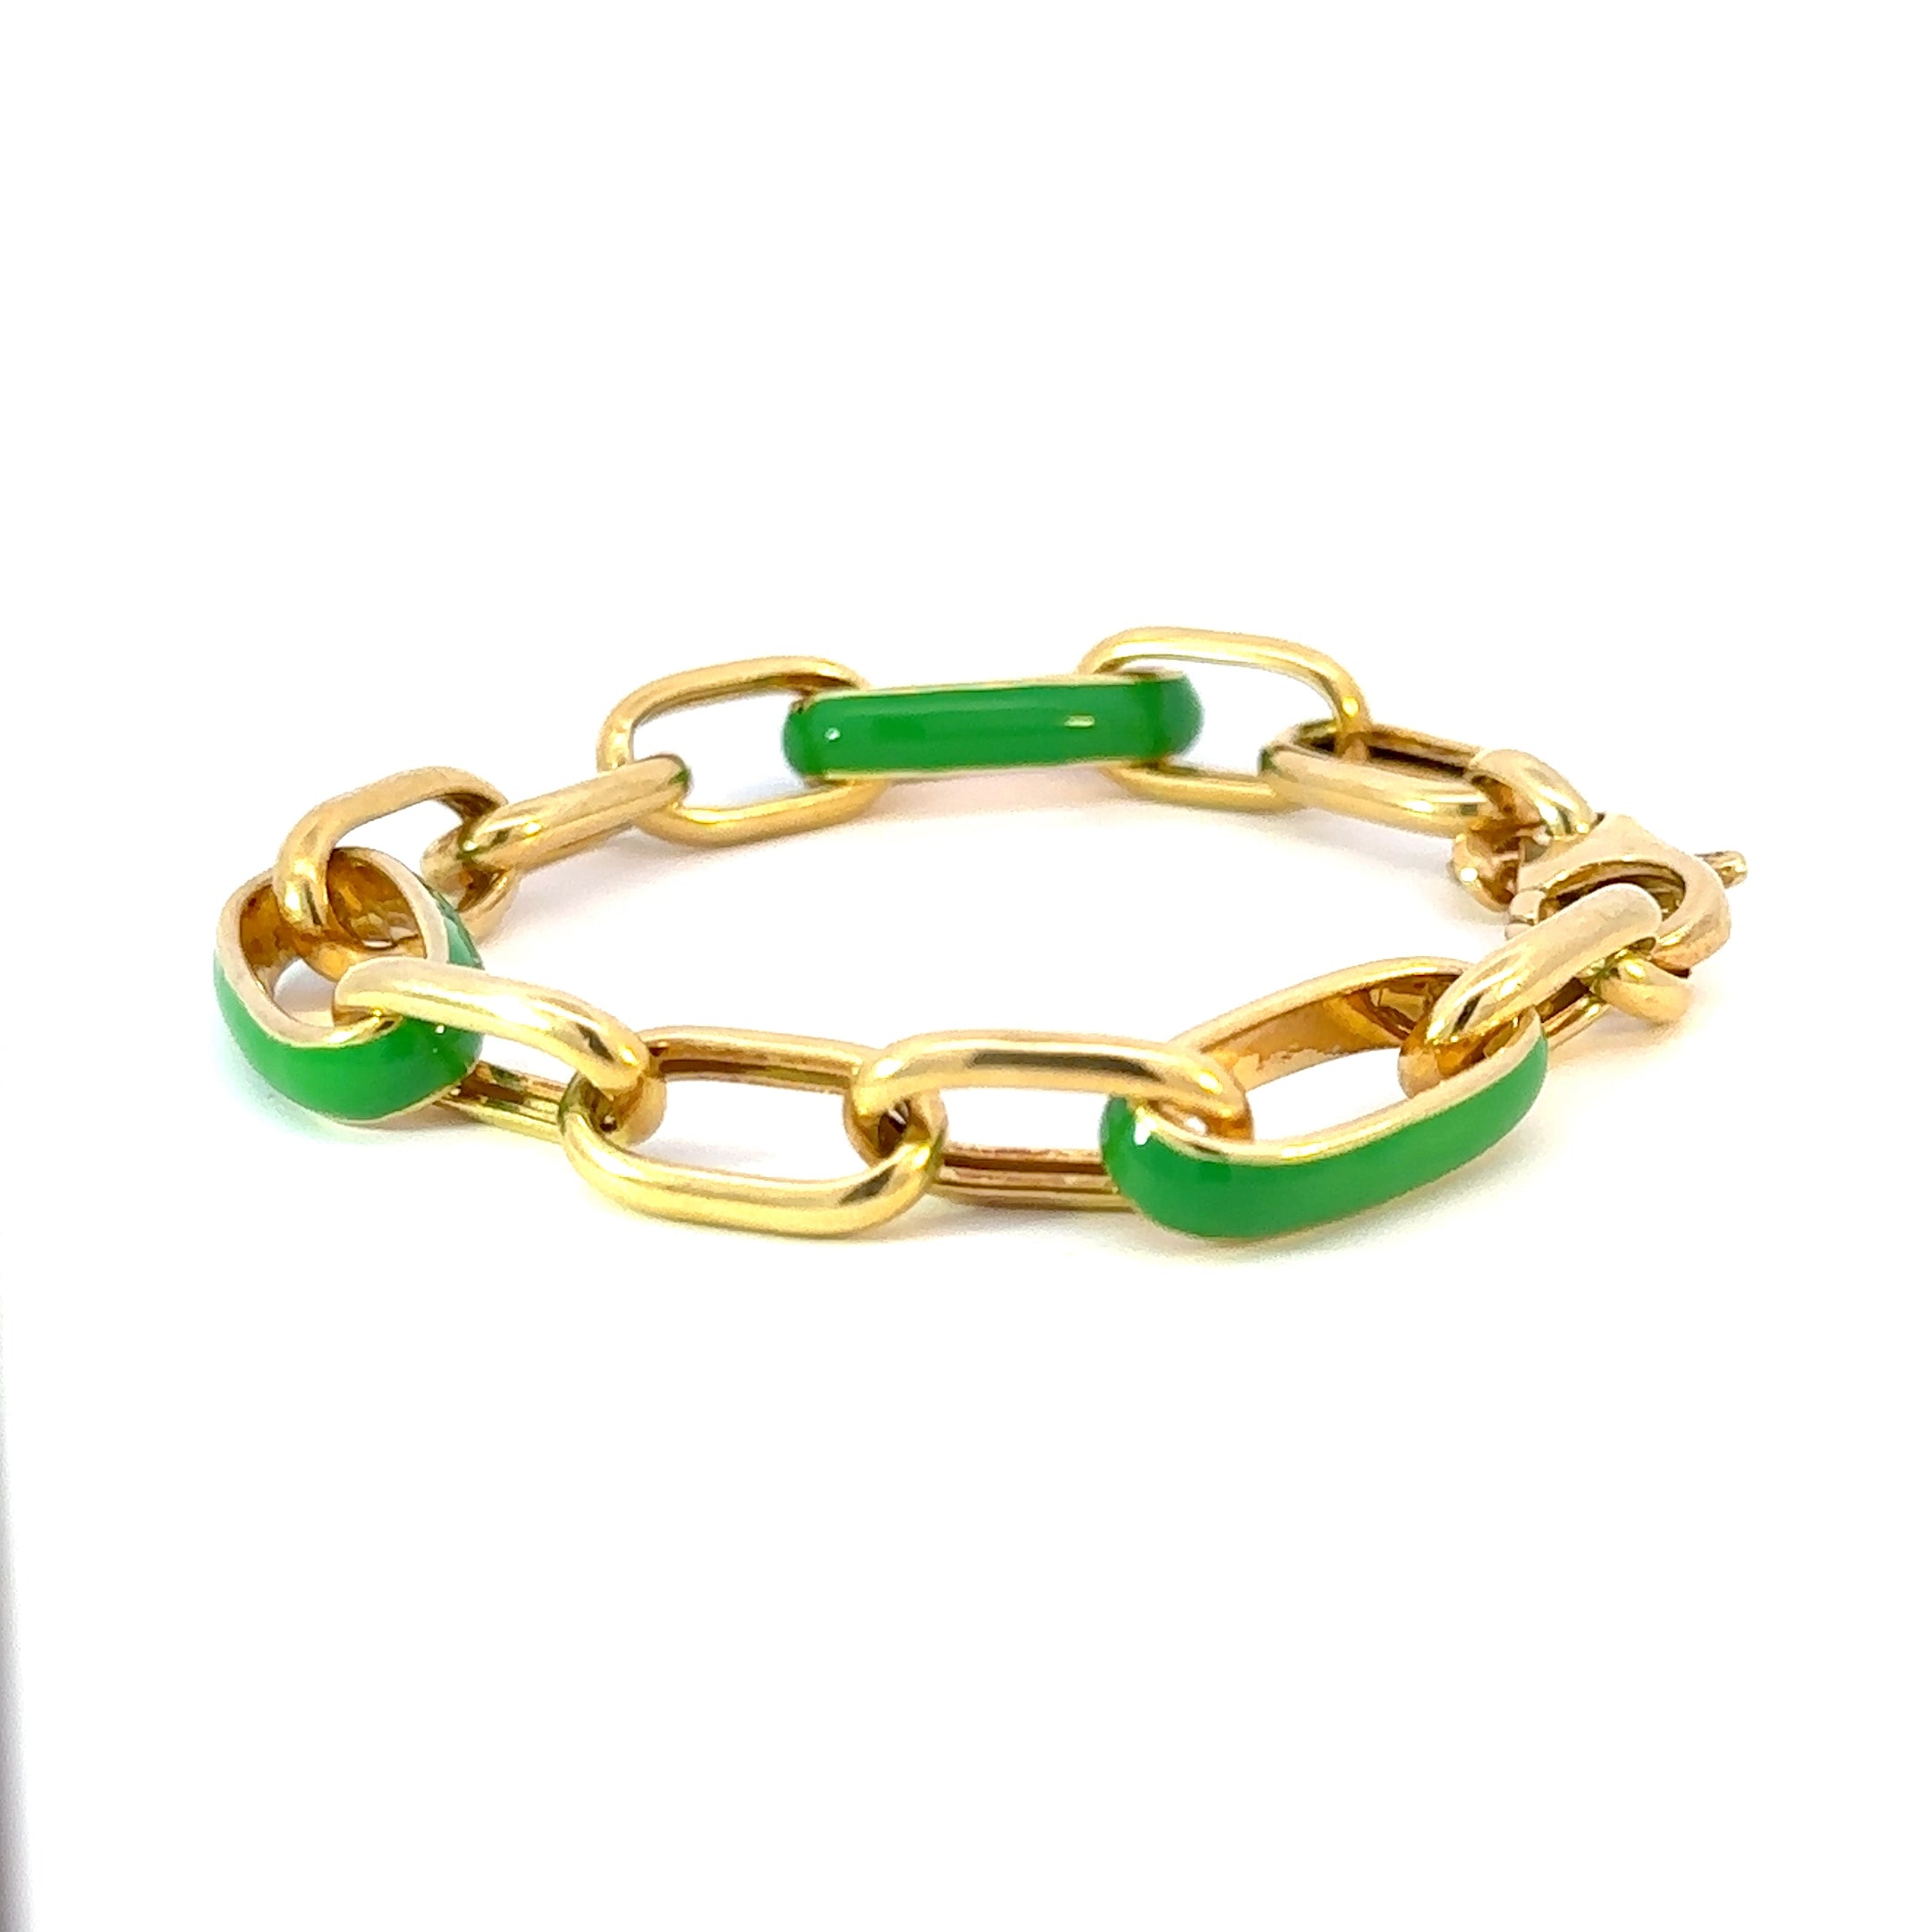 Enamel Soft Chain Style Bracelet